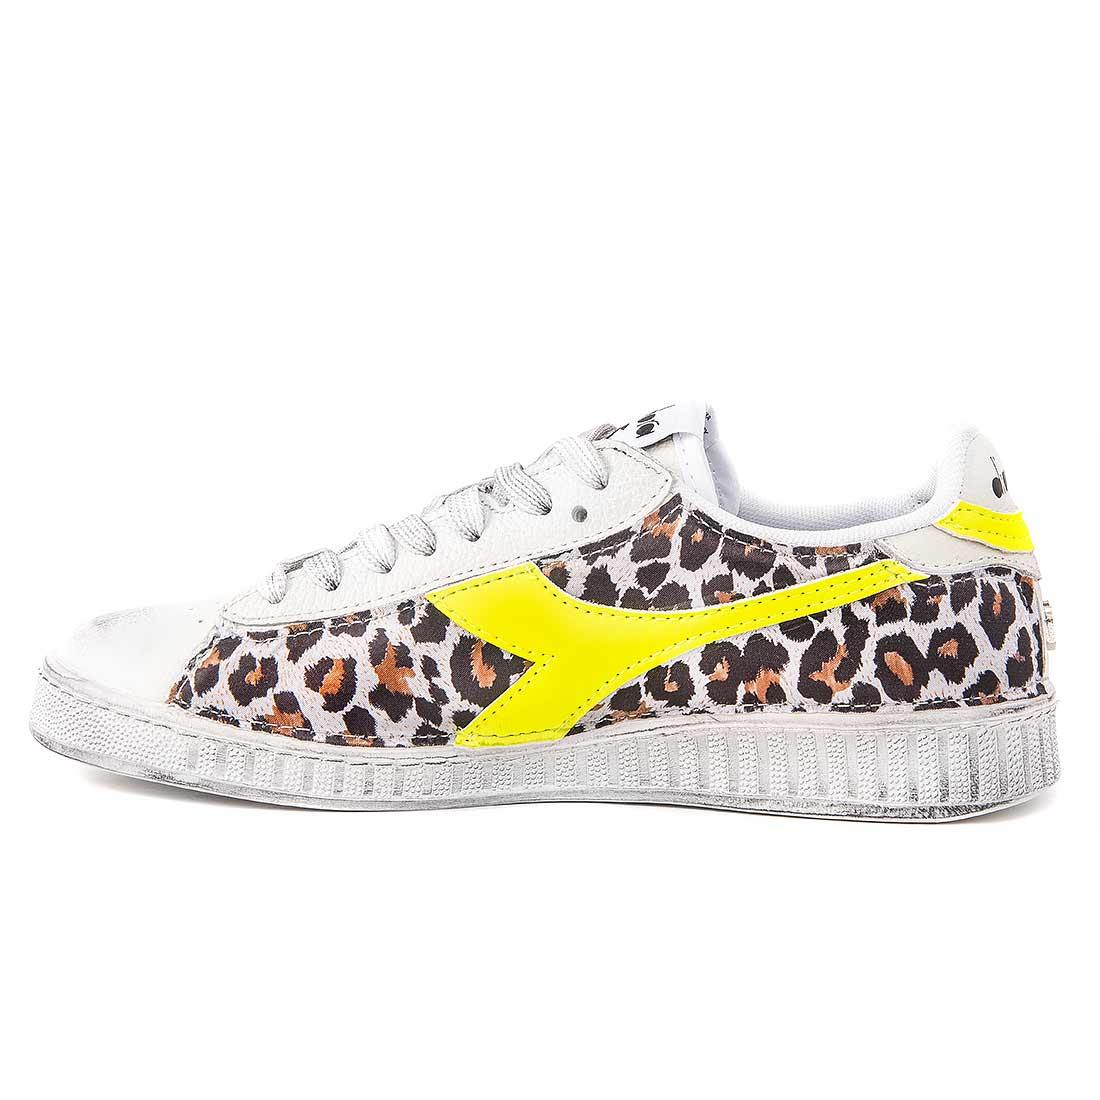 Sneakers Diadora Game low giallo fluo leopardate animalier maculate fluorescente